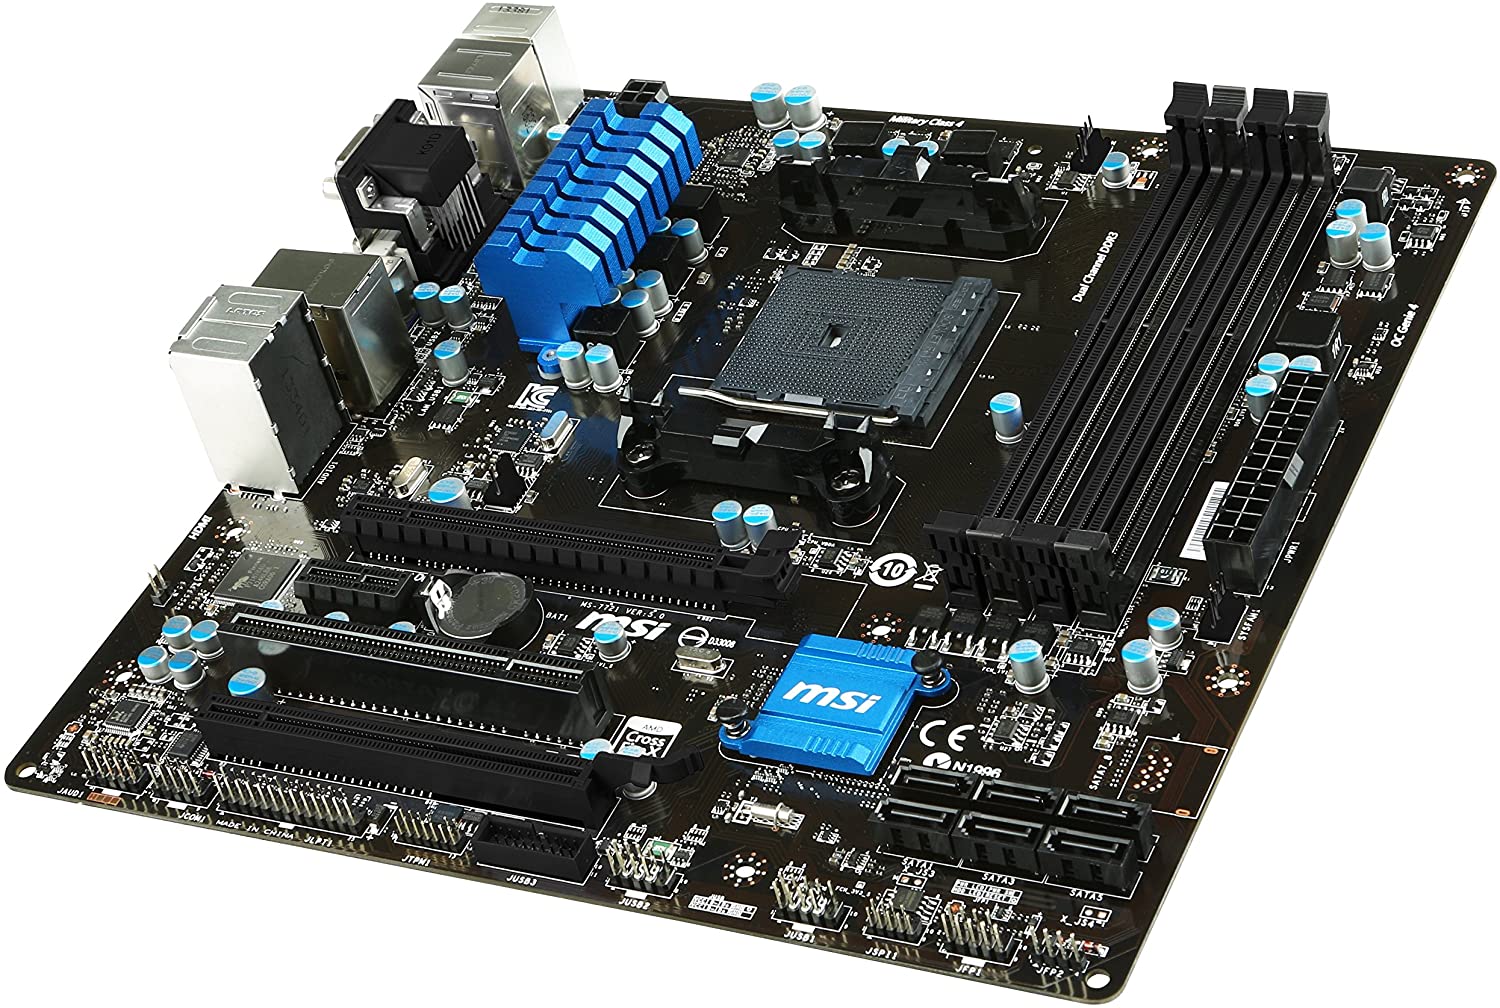 MSI A78M-E45 V2 FM2+ AMD A78 SATA 6 GB/s USB 3.0 HDMI Micro ATX AMD Motherboard